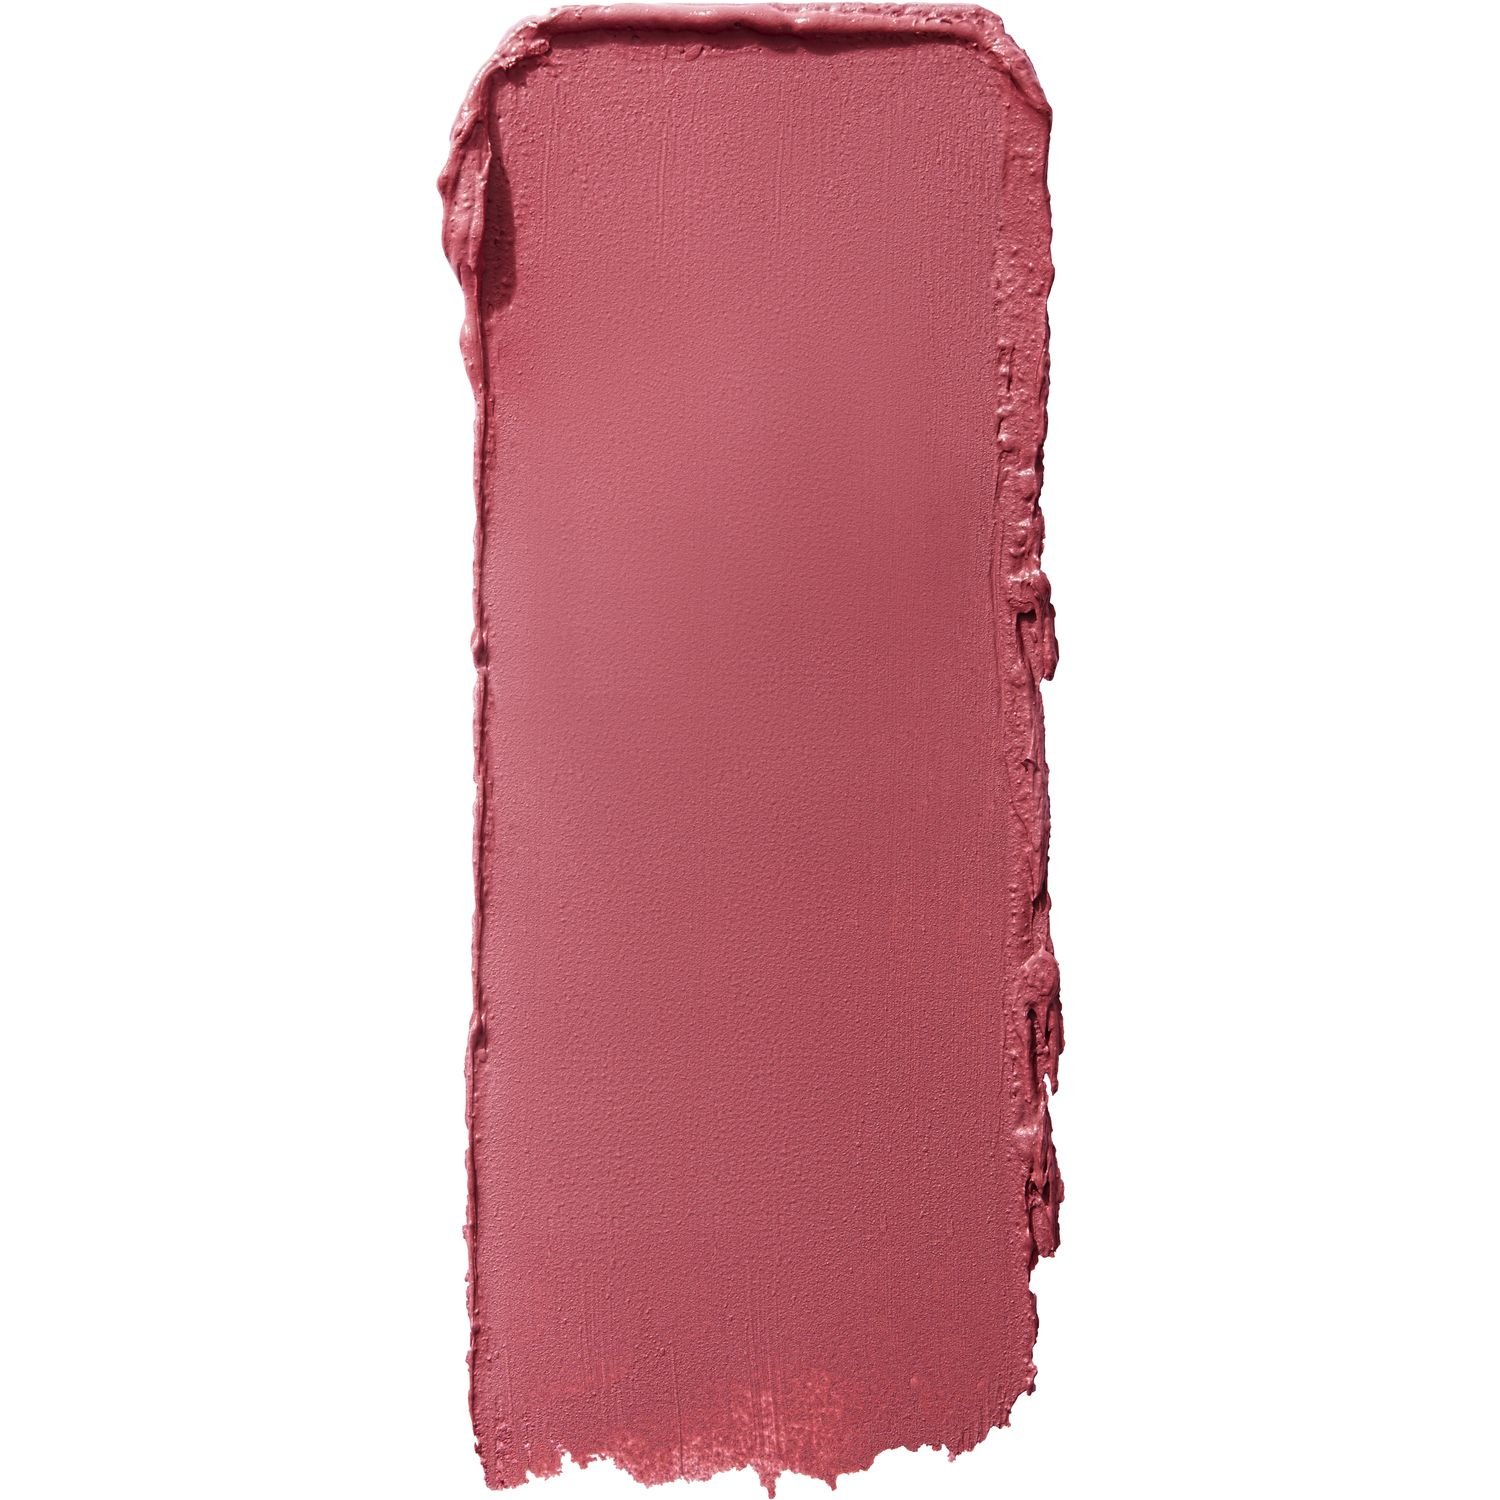 Губная помада-карандаш Maybelline New York Super Stay Ink Crayon, тон 85 (Пурпурно-розовый Матовый), 2 г (B3299400) - фото 2